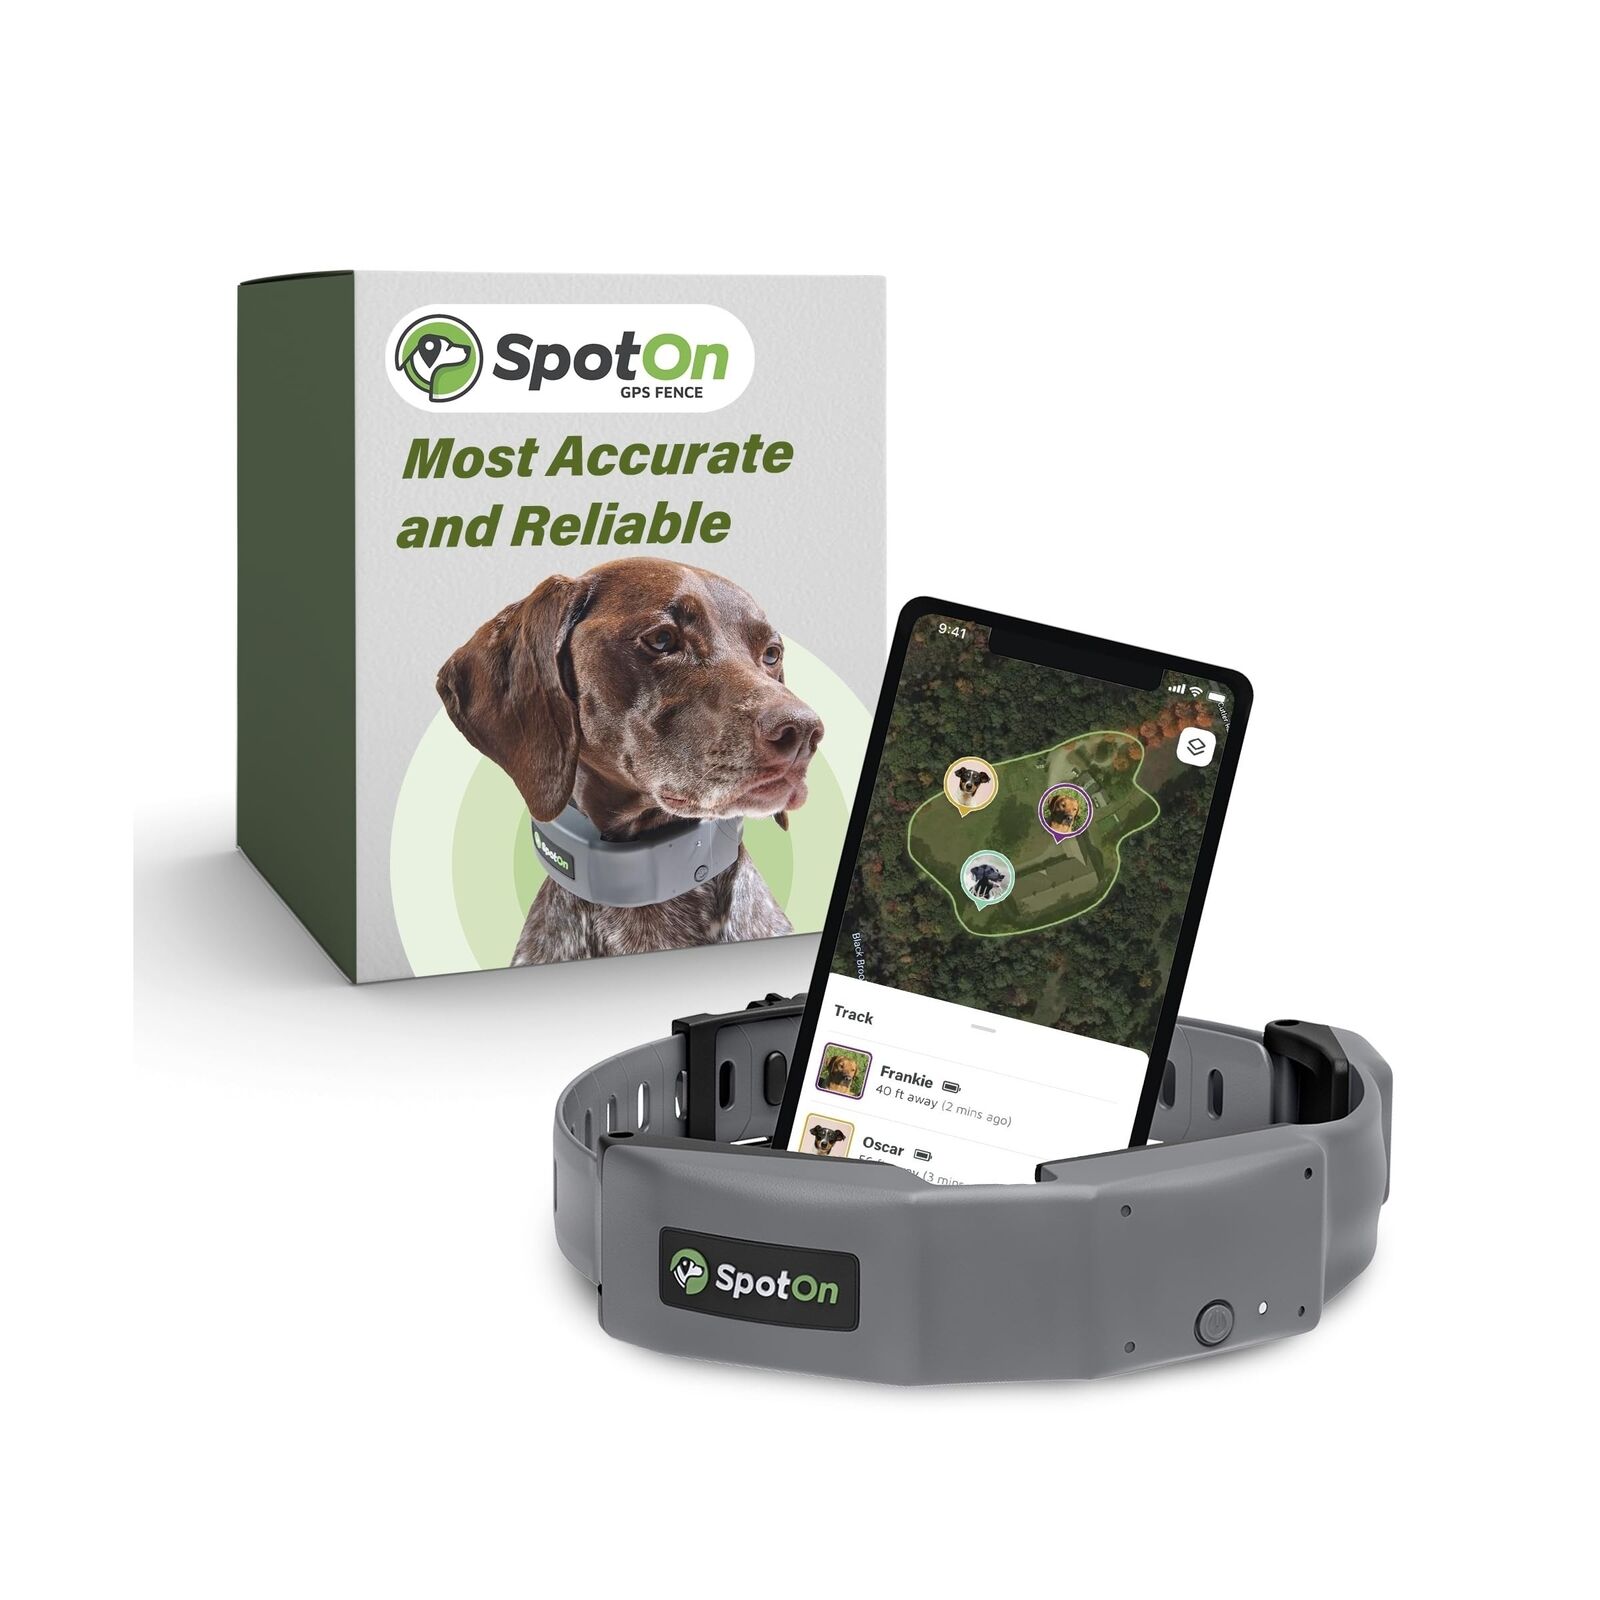 SpotOn GPS Dog Fence, App Based Wireless Dog Fence Collar, Waterproof, Reliab...